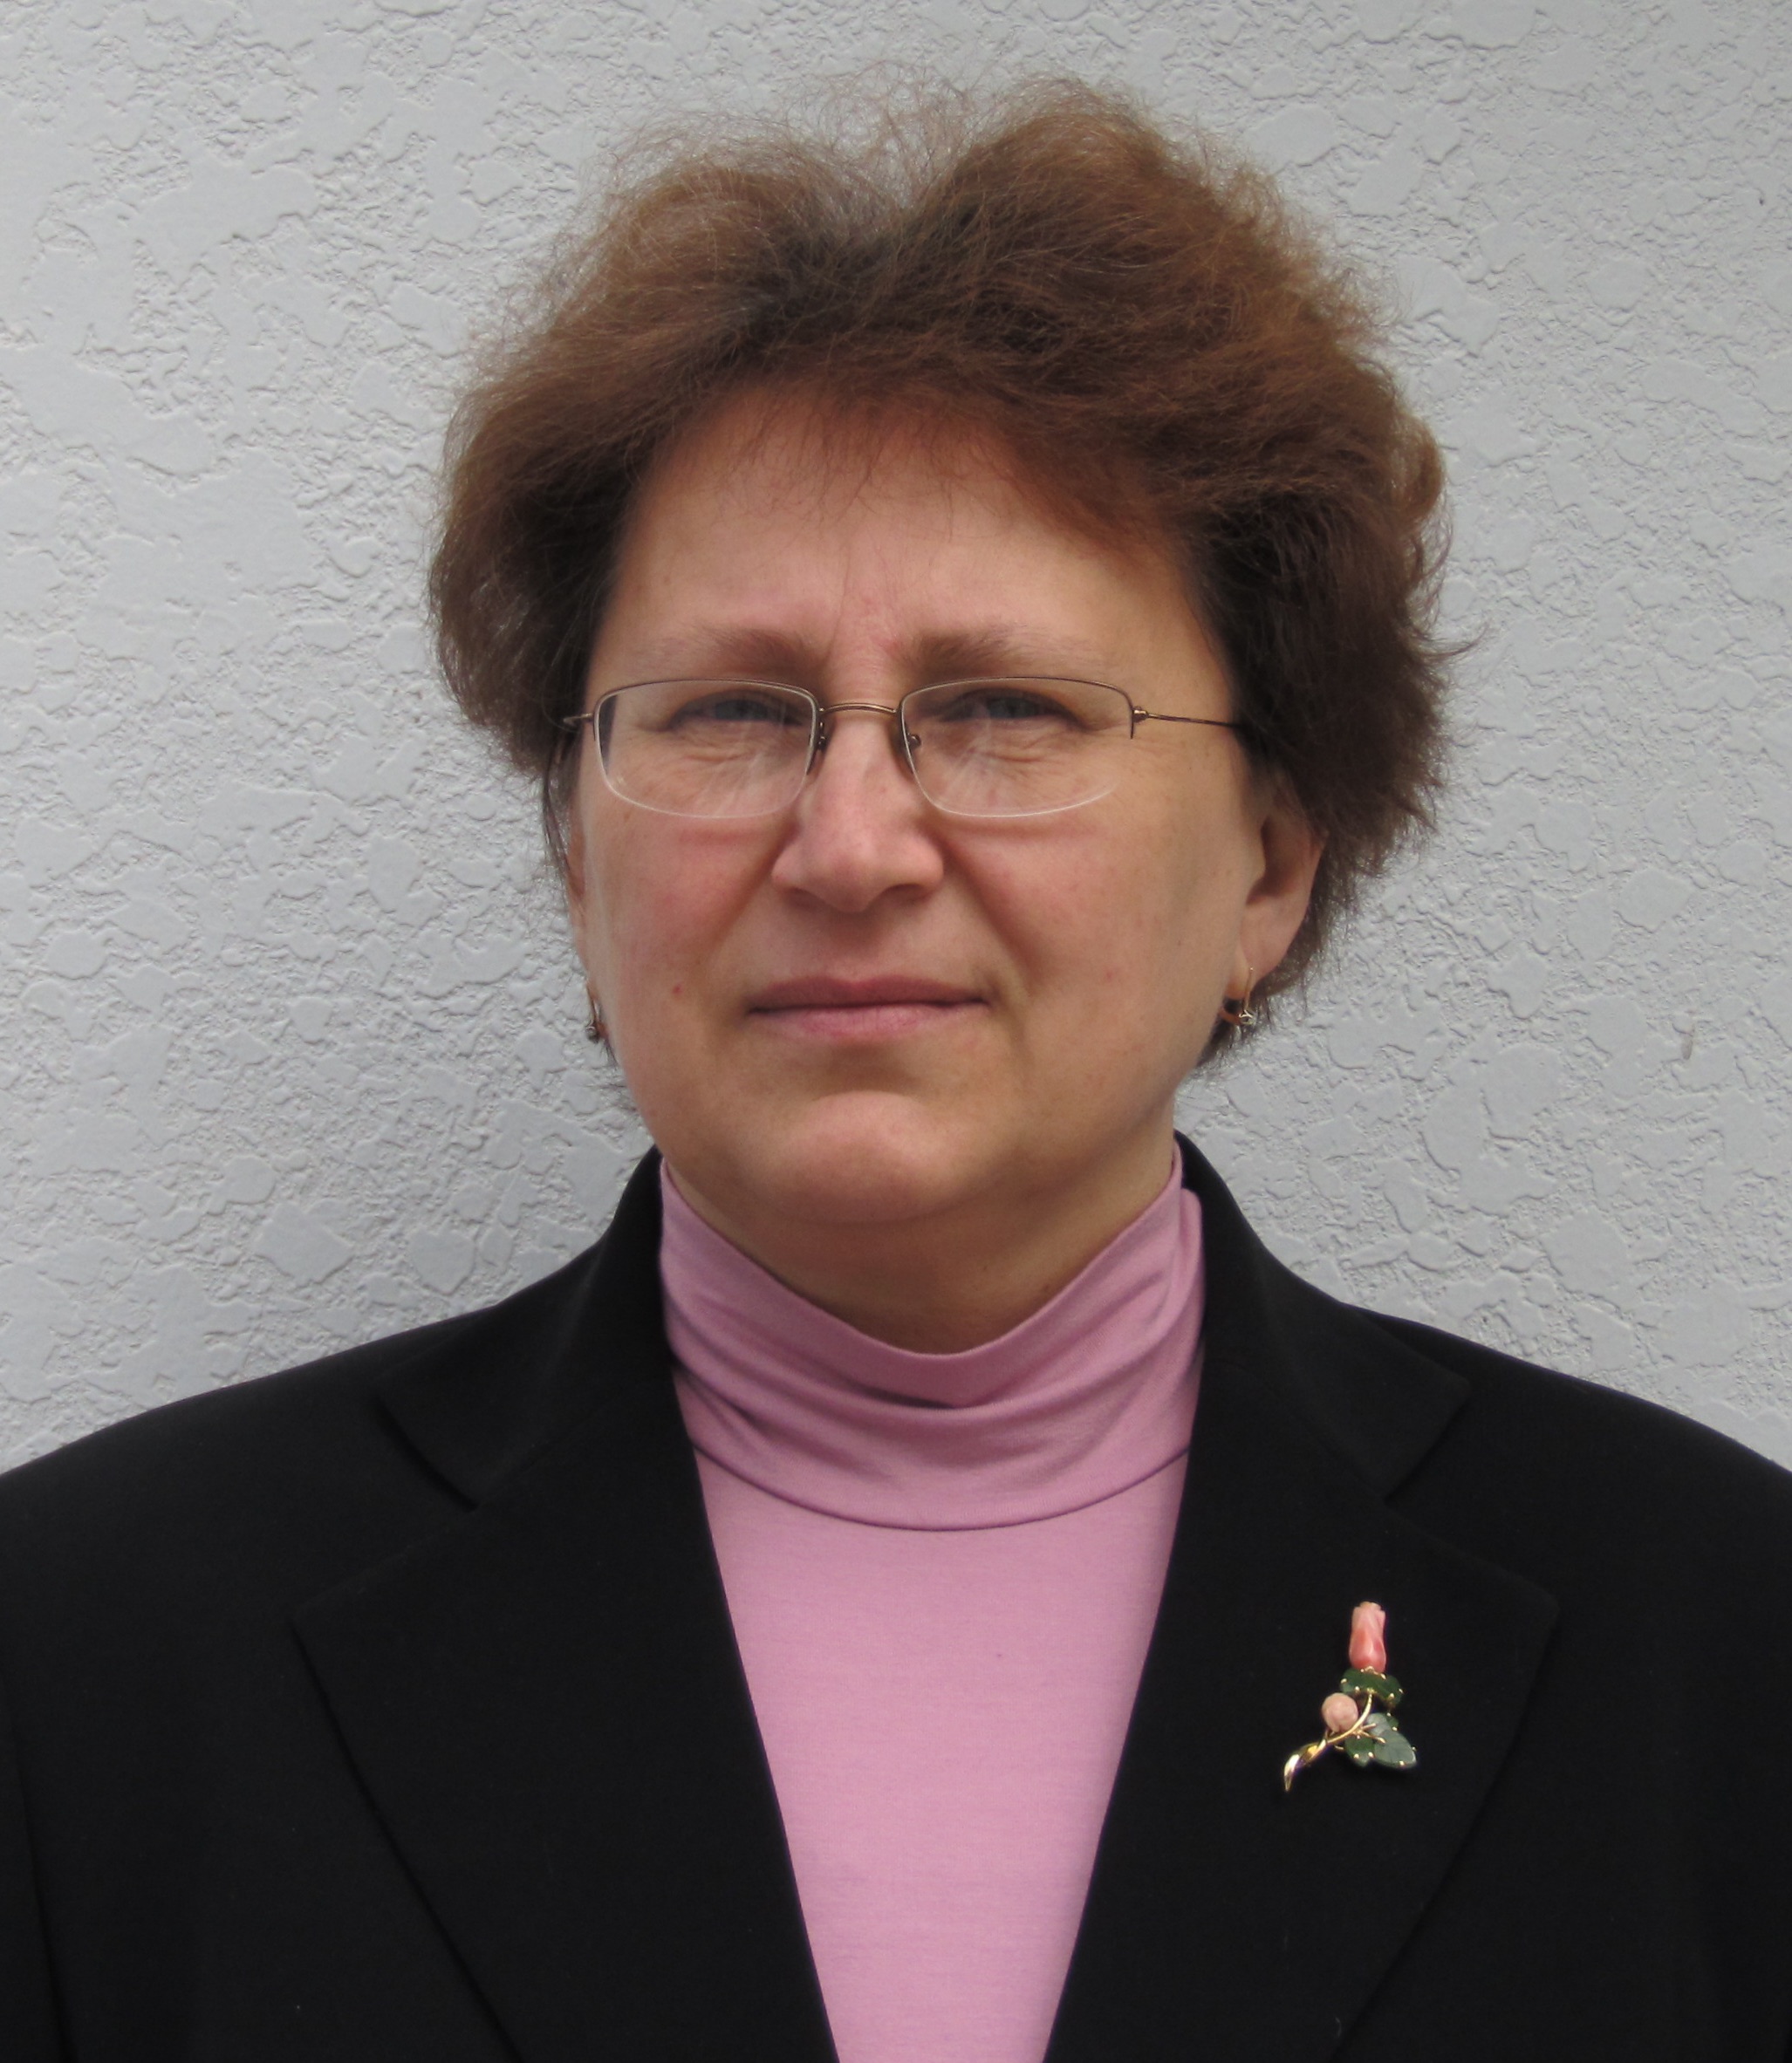 Надия Рашидовна Муратова - преподаватель математики